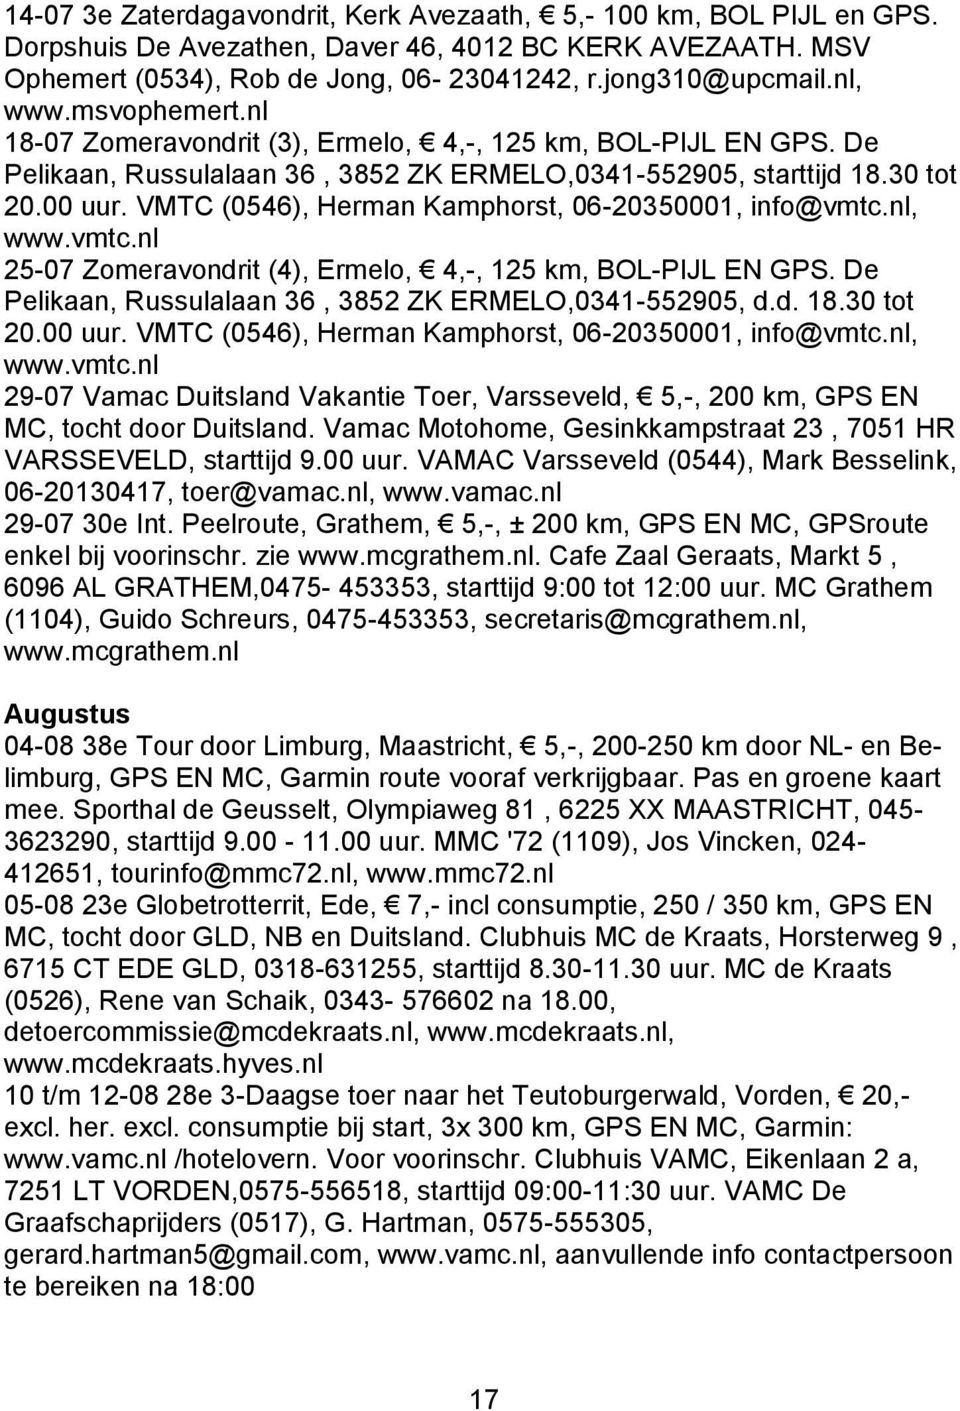 VMTC (0546), Herman Kamphorst, 06-20350001, info@vmtc.nl, www.vmtc.nl 25-07 Zomeravondrit (4), Ermelo, 4,-, 125 km, BOL-PIJL EN GPS. De Pelikaan, Russulalaan 36, 3852 ZK ERMELO,0341-552905, d.d. 18.